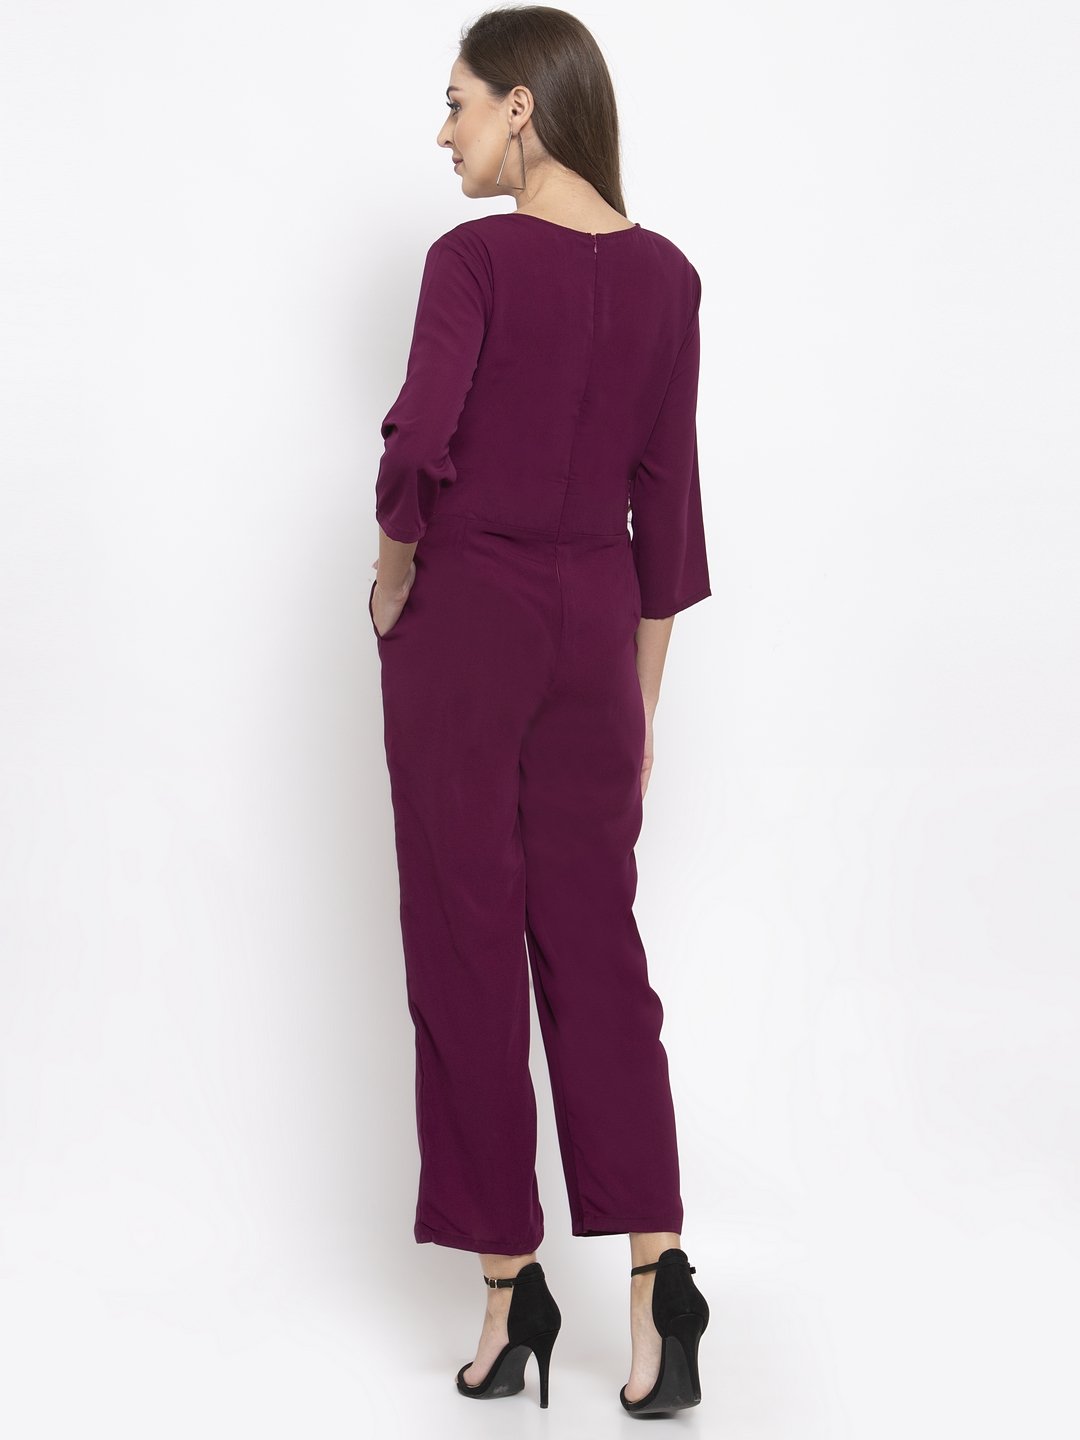 Women's Purple Solid Jumpsuit - Jompers